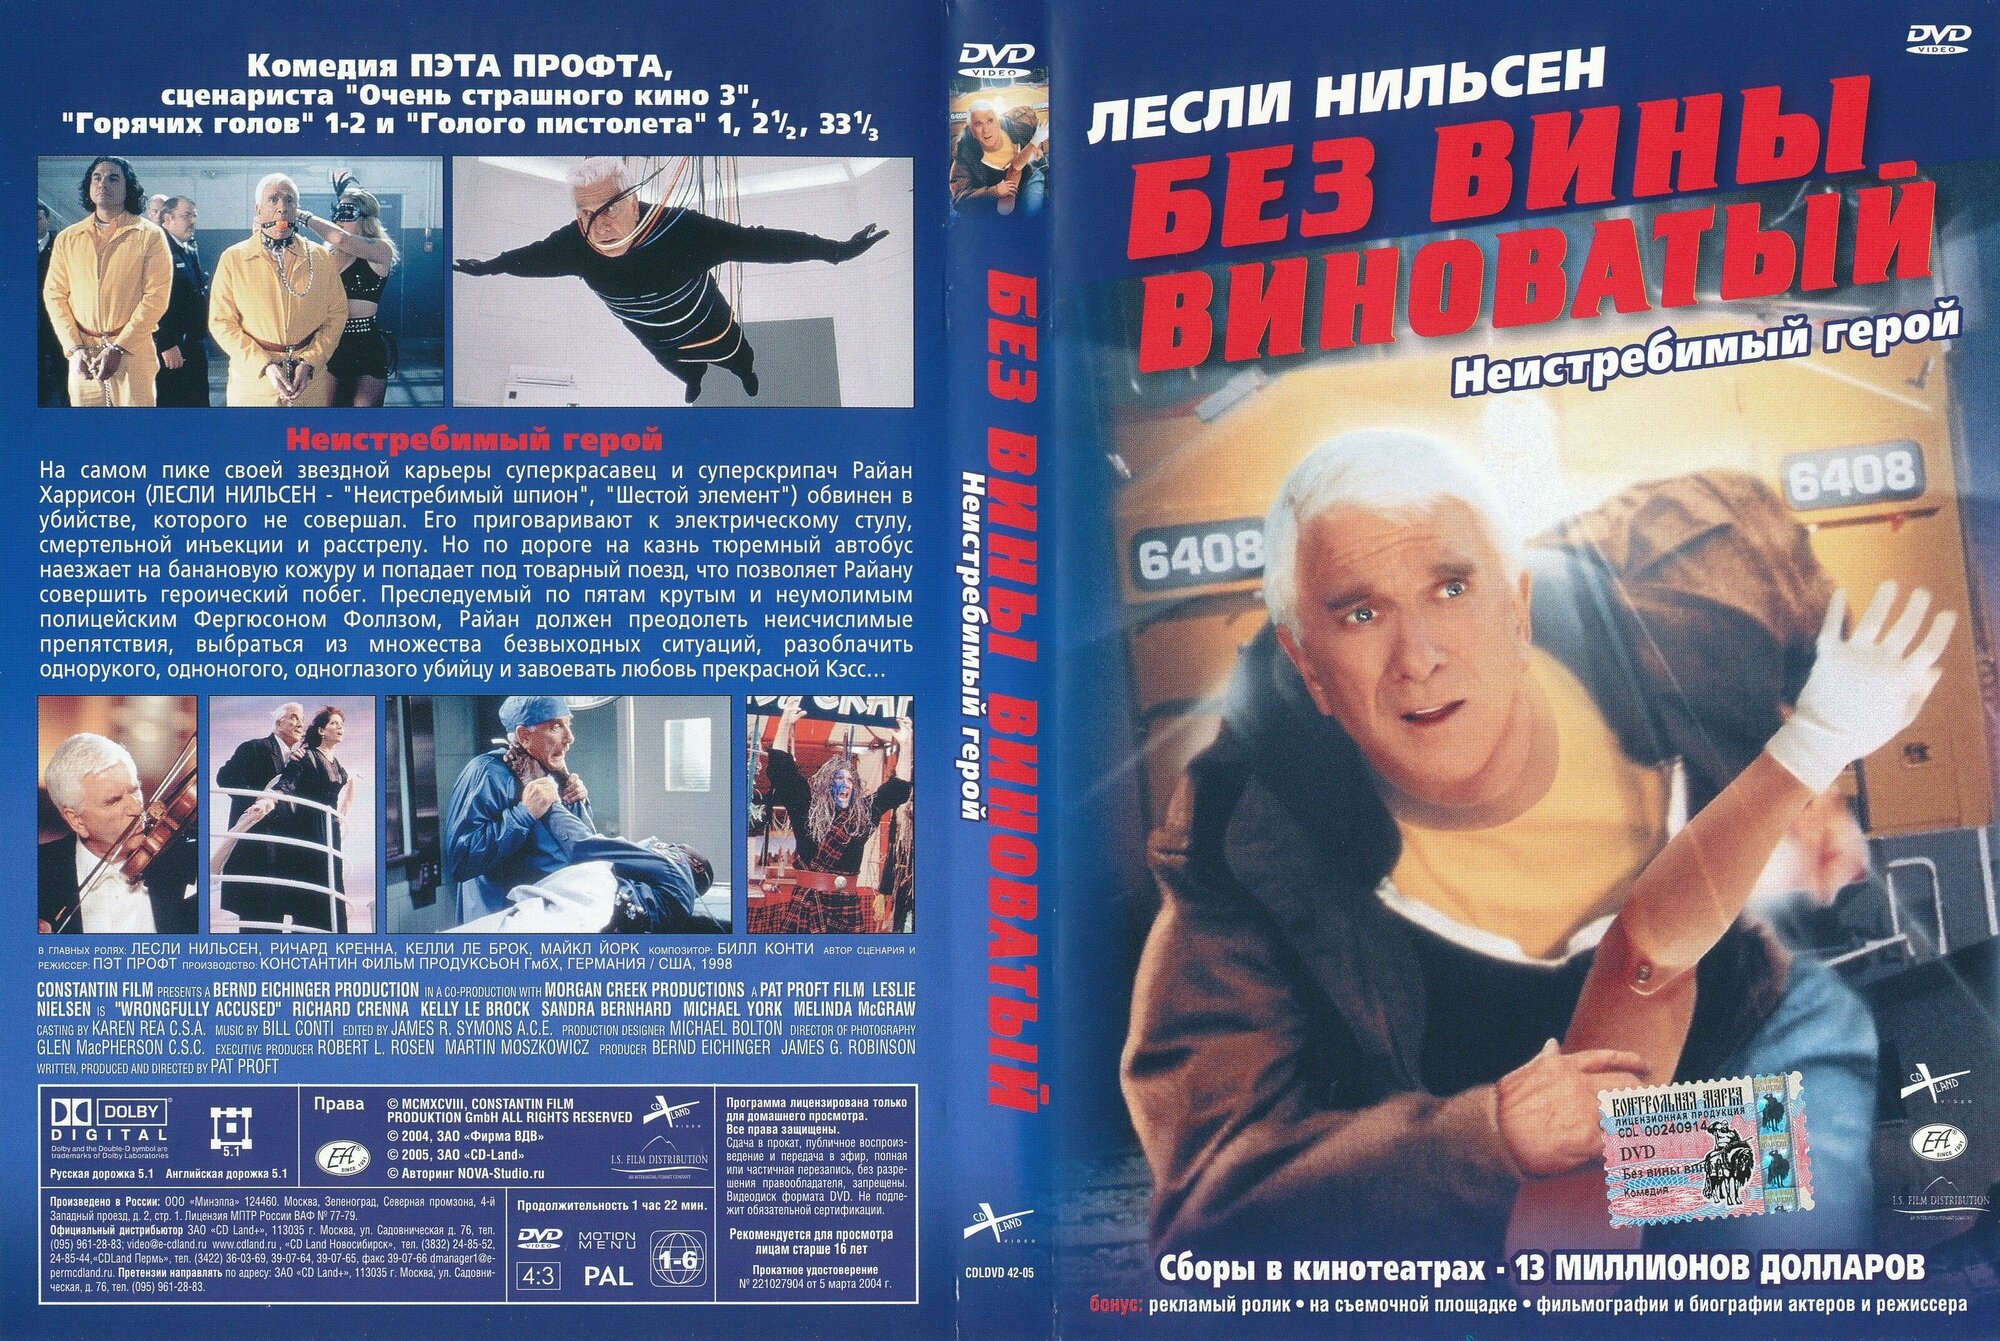 Фильм "Без вины виноватый" 1998г. (DVD)